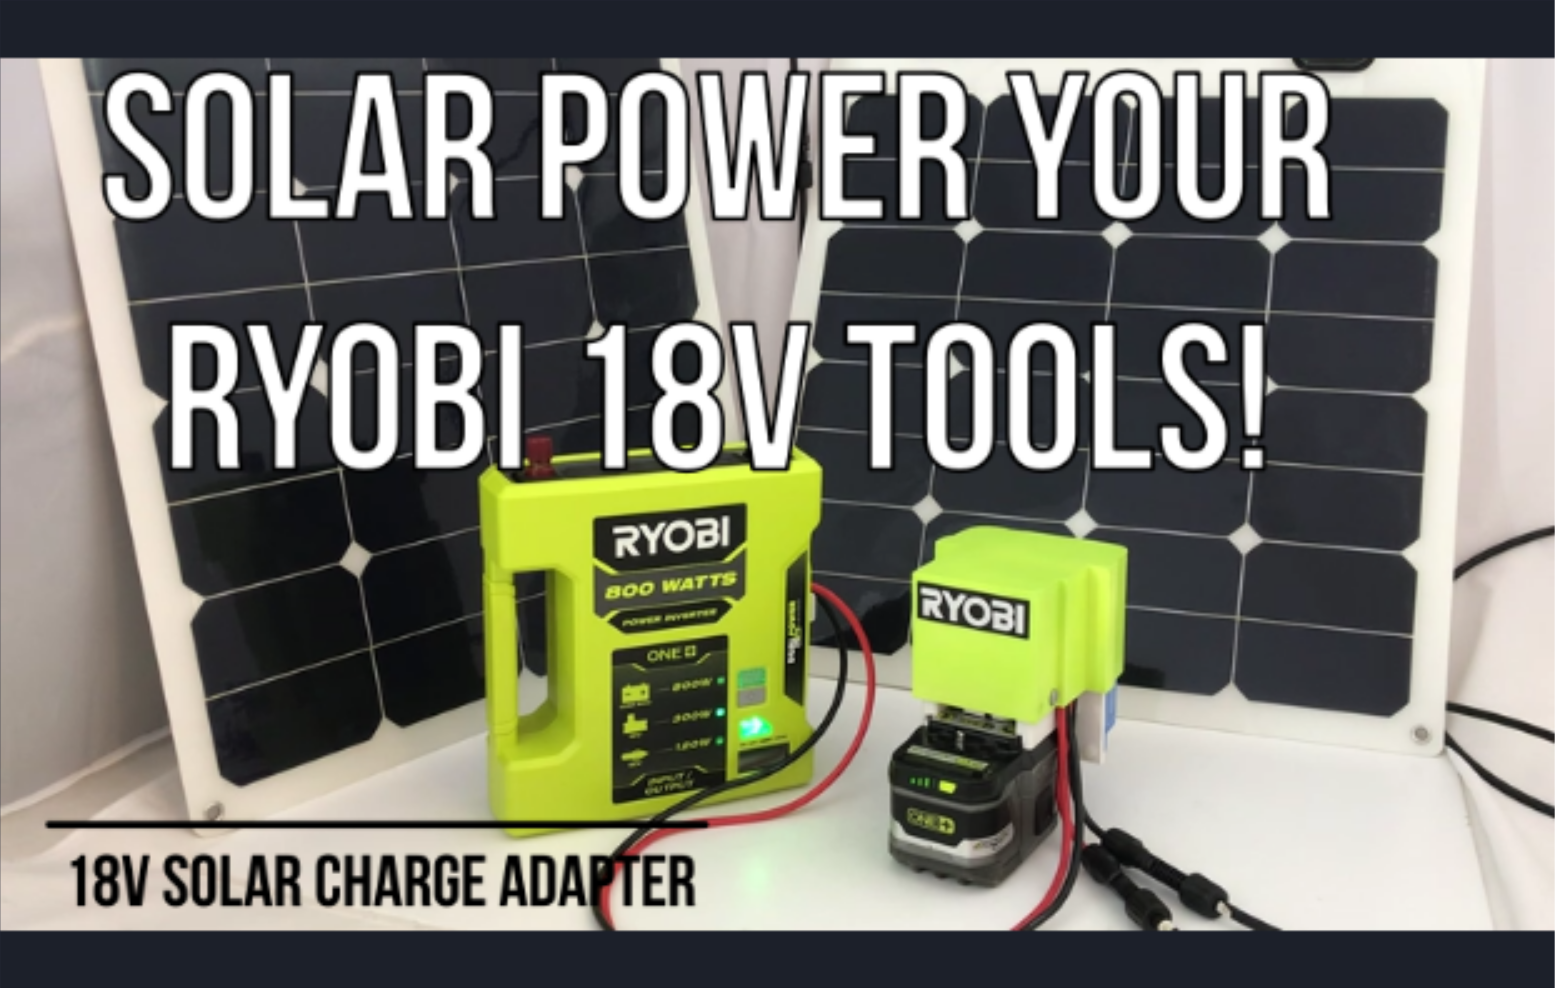 Solar Power your RYOBI tools!